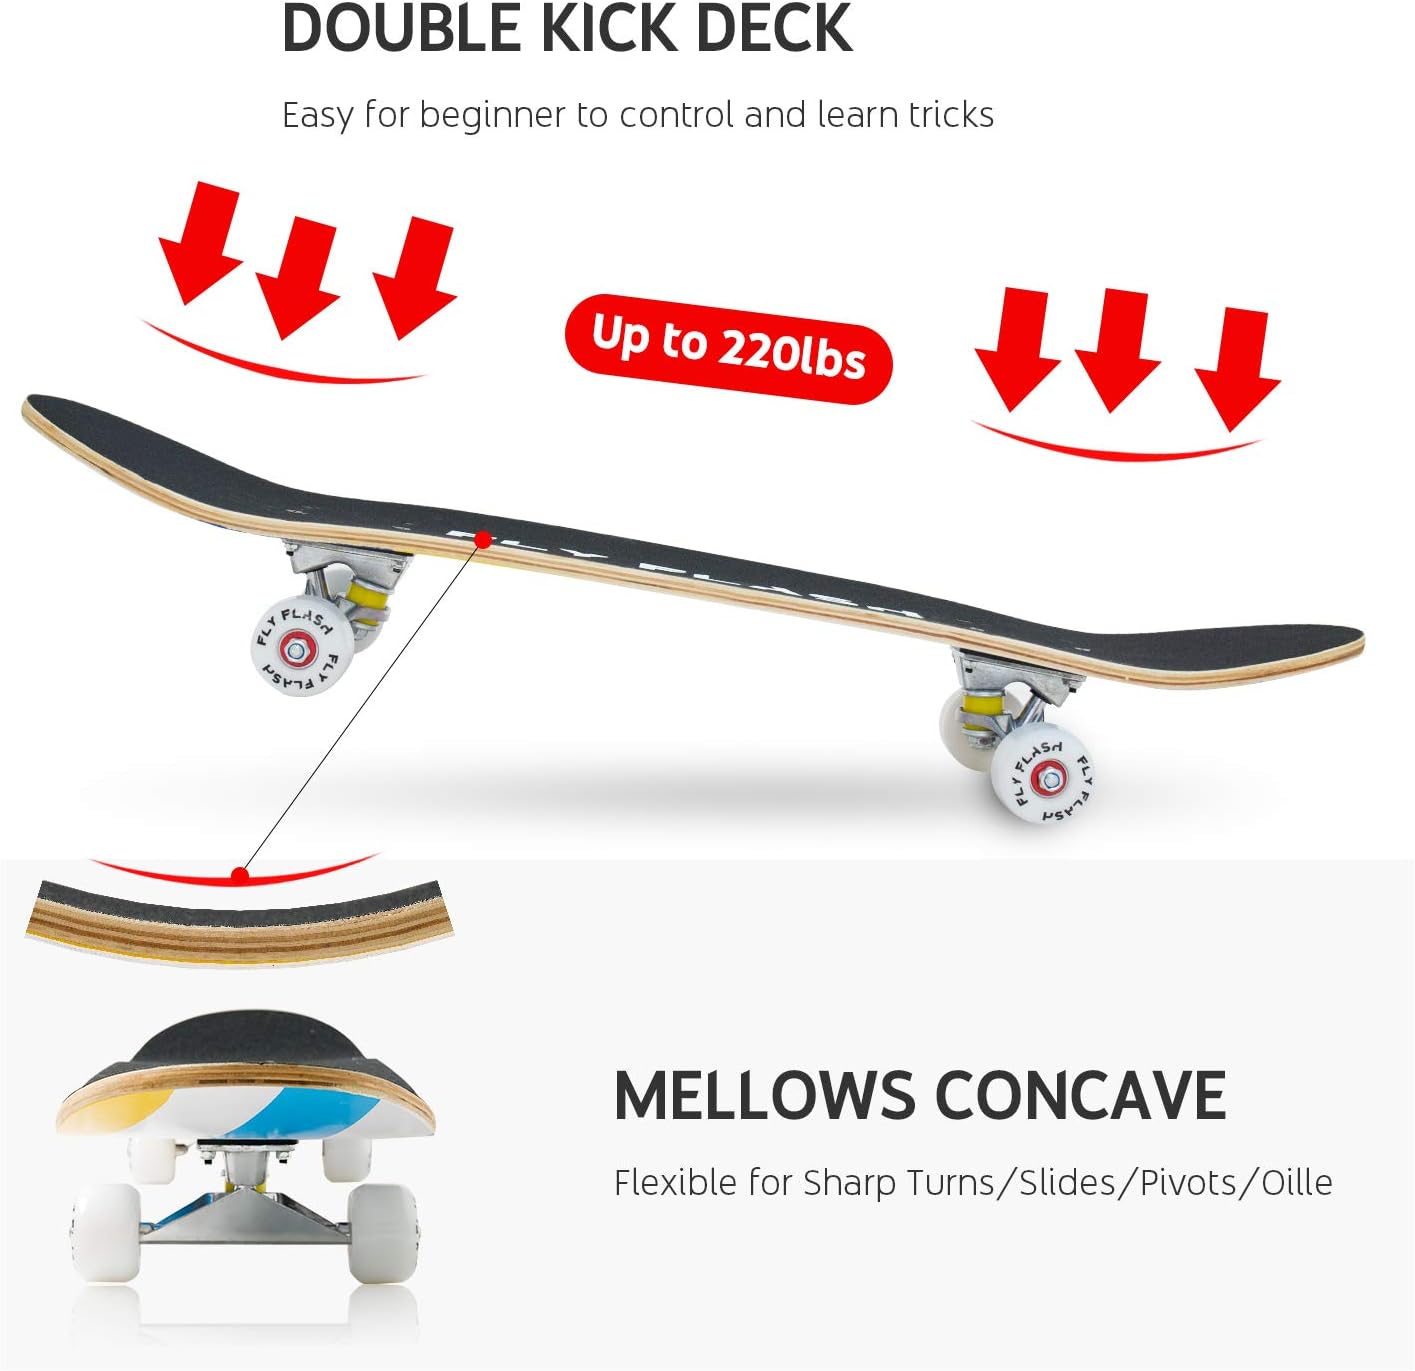 FlyFlash Skateboard, 31x 8 Complete Standard Skate Boards for Girls Boys Beginner, 9 Layer Maple Double Kick Deck Skateboards for Kids Youth Teens